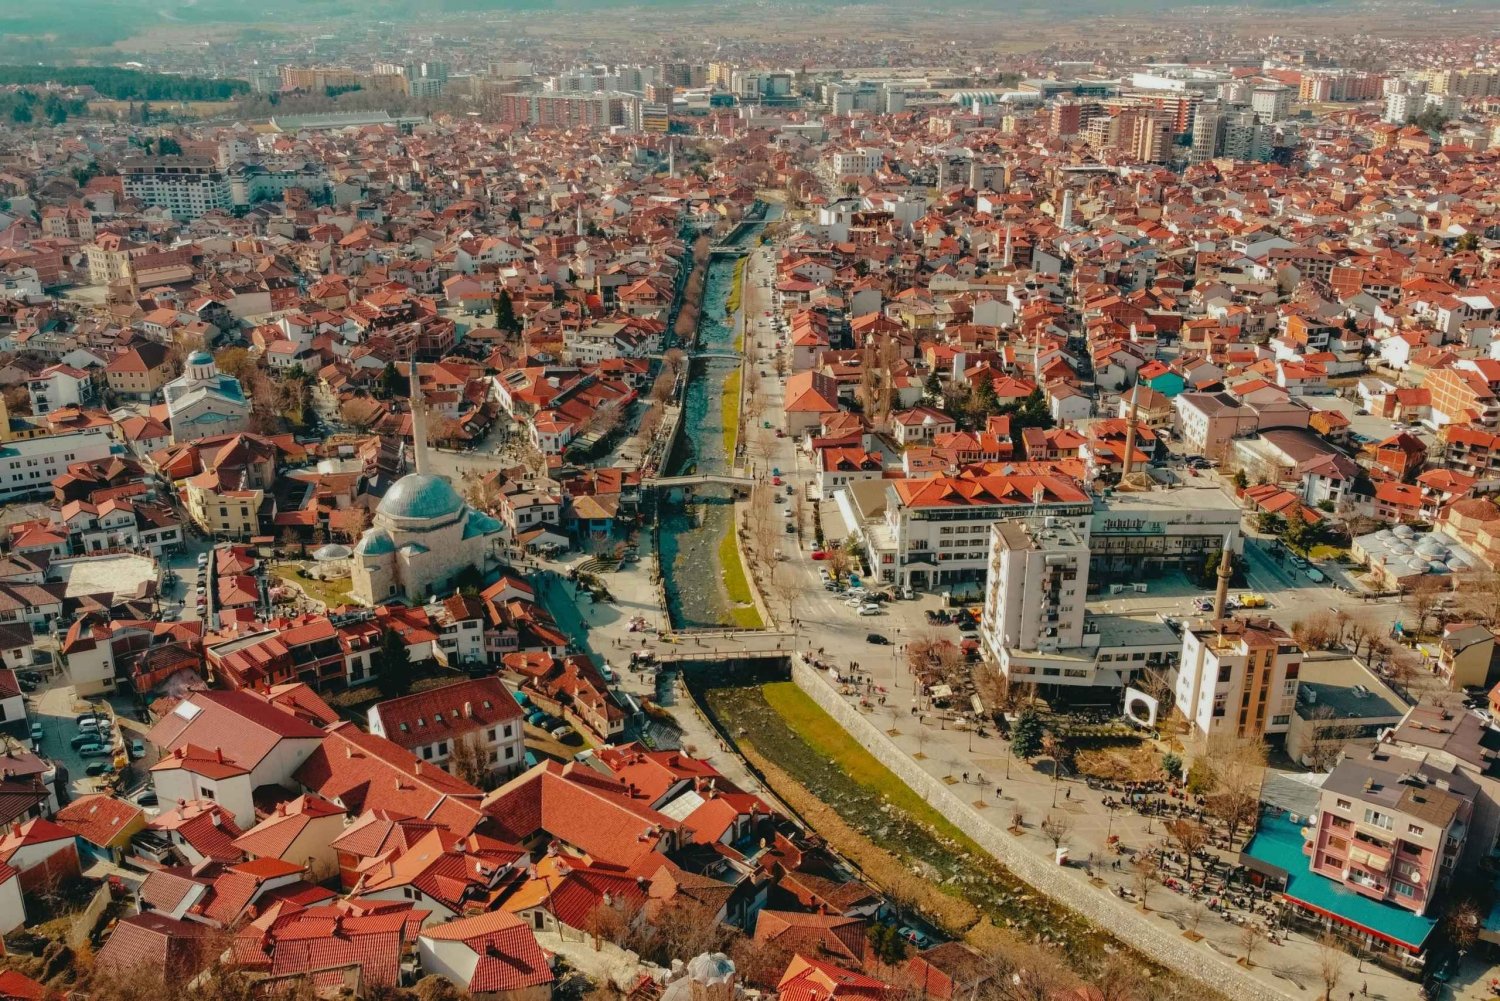 Prizren - Kosovo, Full Day Tour from Tirana and Durres